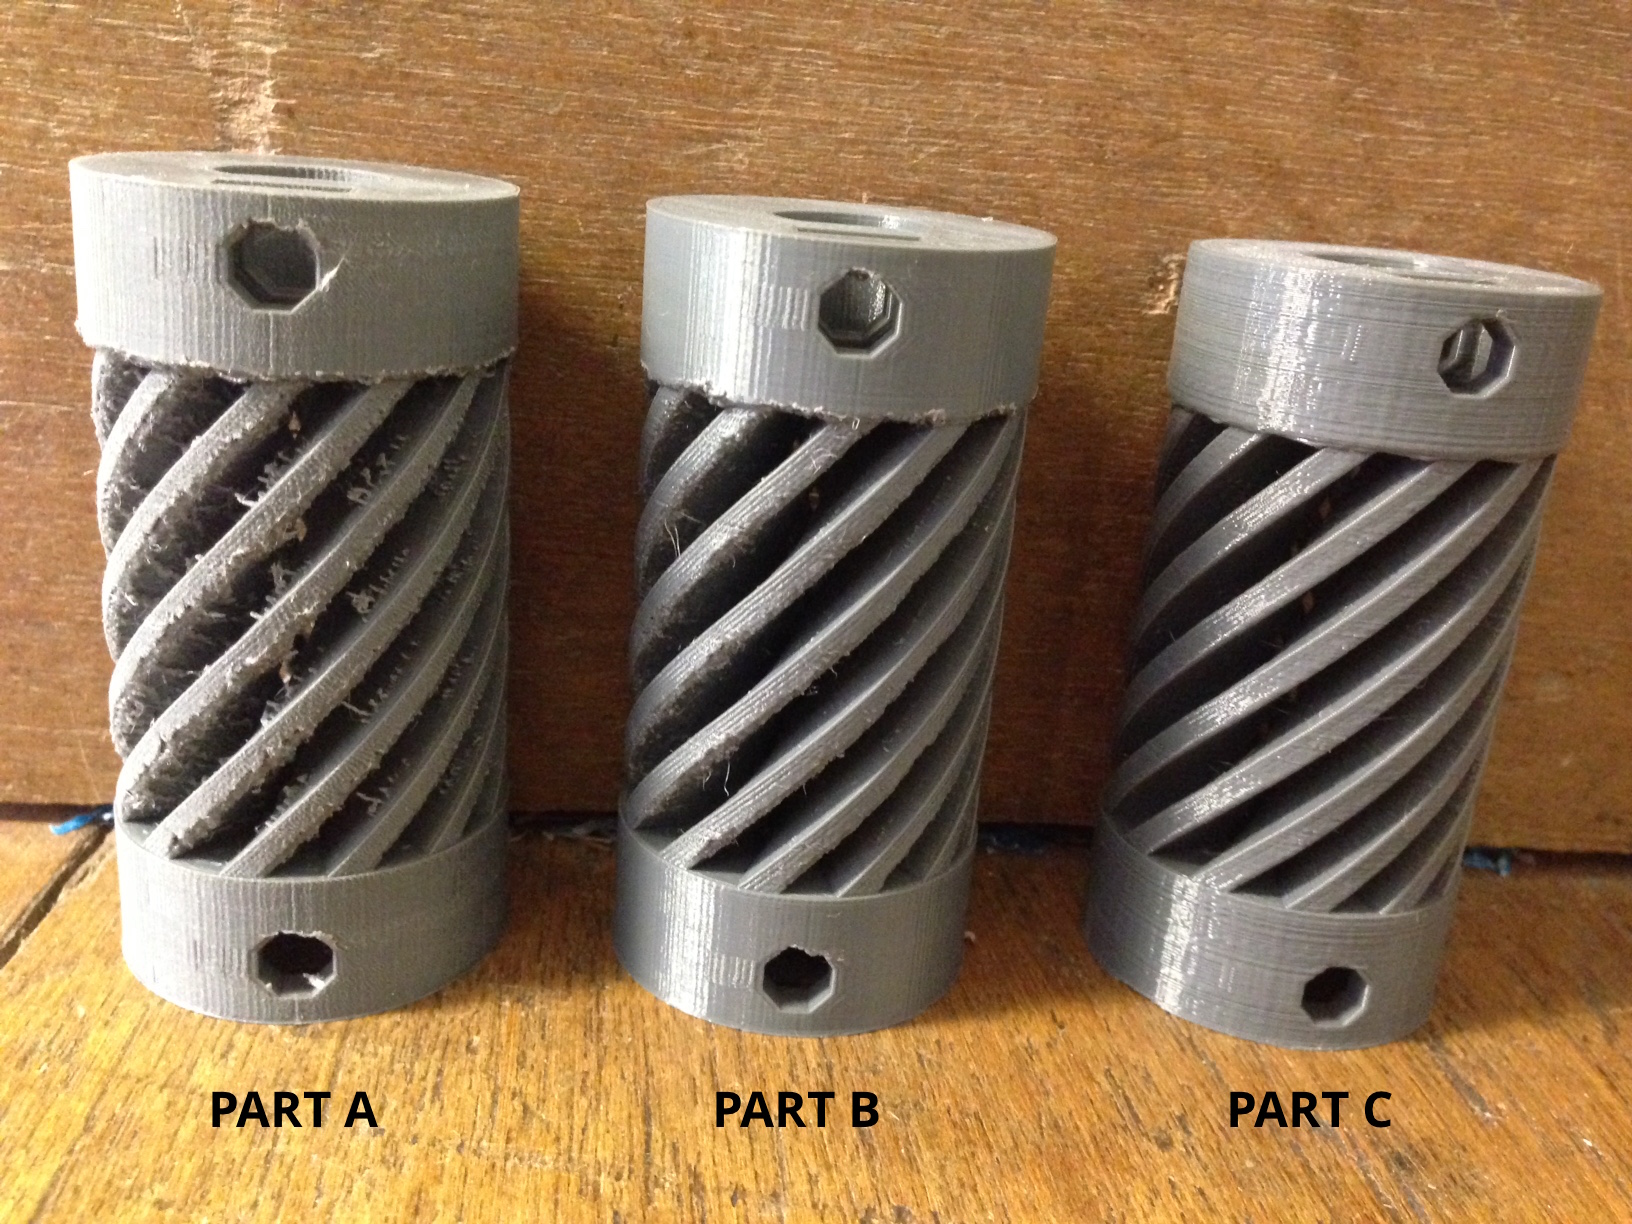 Alexander Graham Bell Rektangel guld CREAT3D handy 3D printing tips - what do microns really mean?